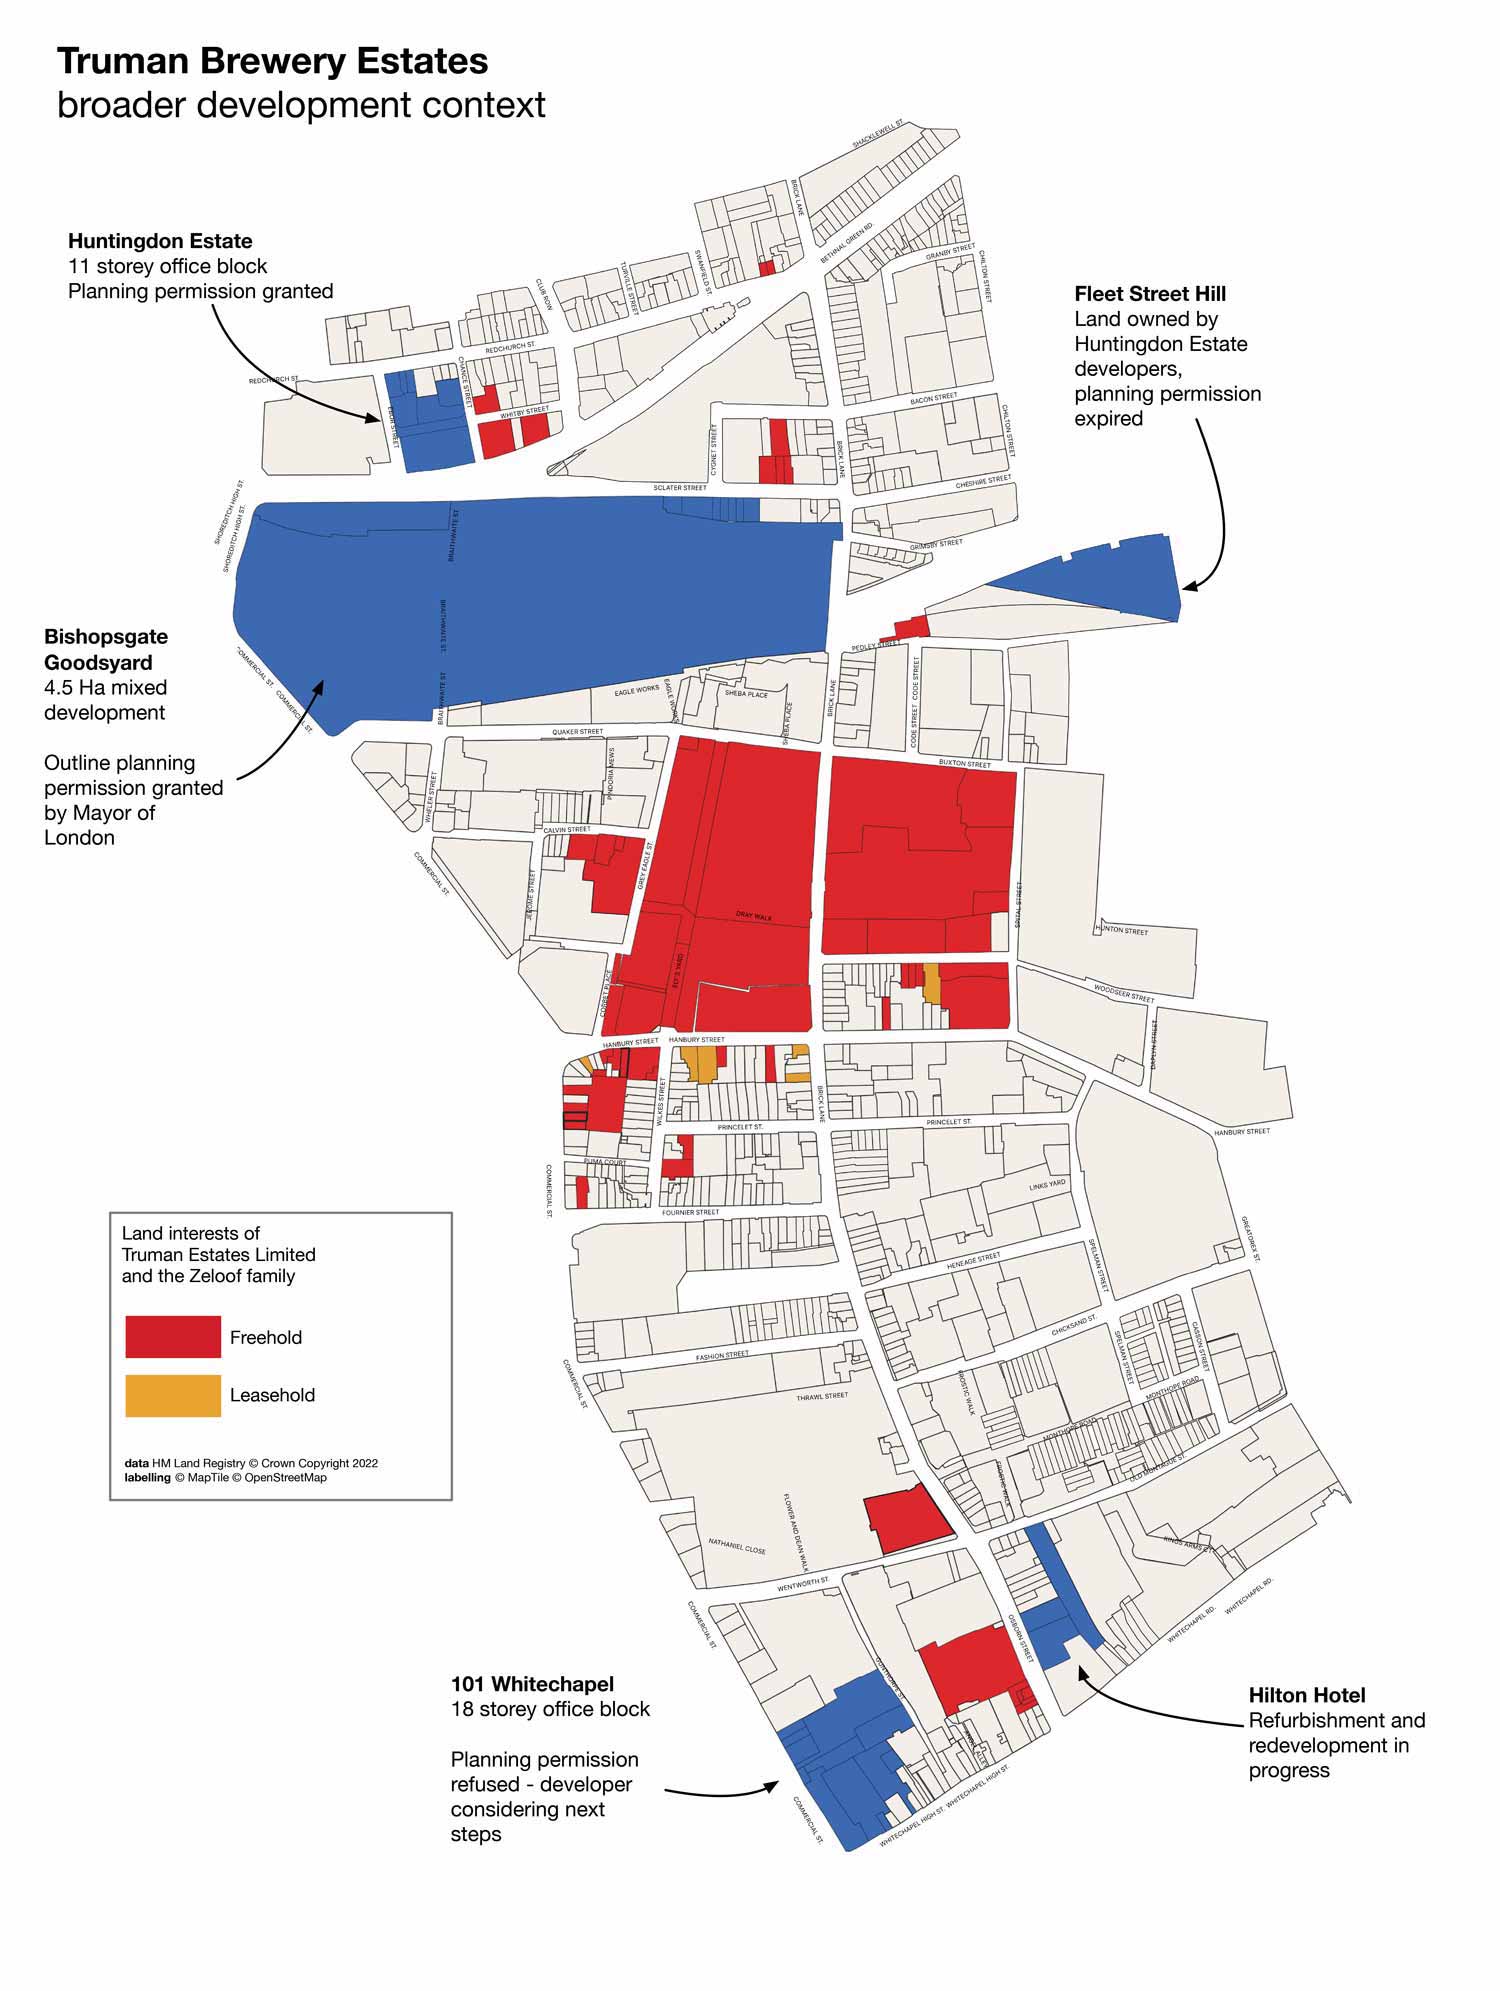 Map showing the broader development plans of the Truman Estates Ltd. 